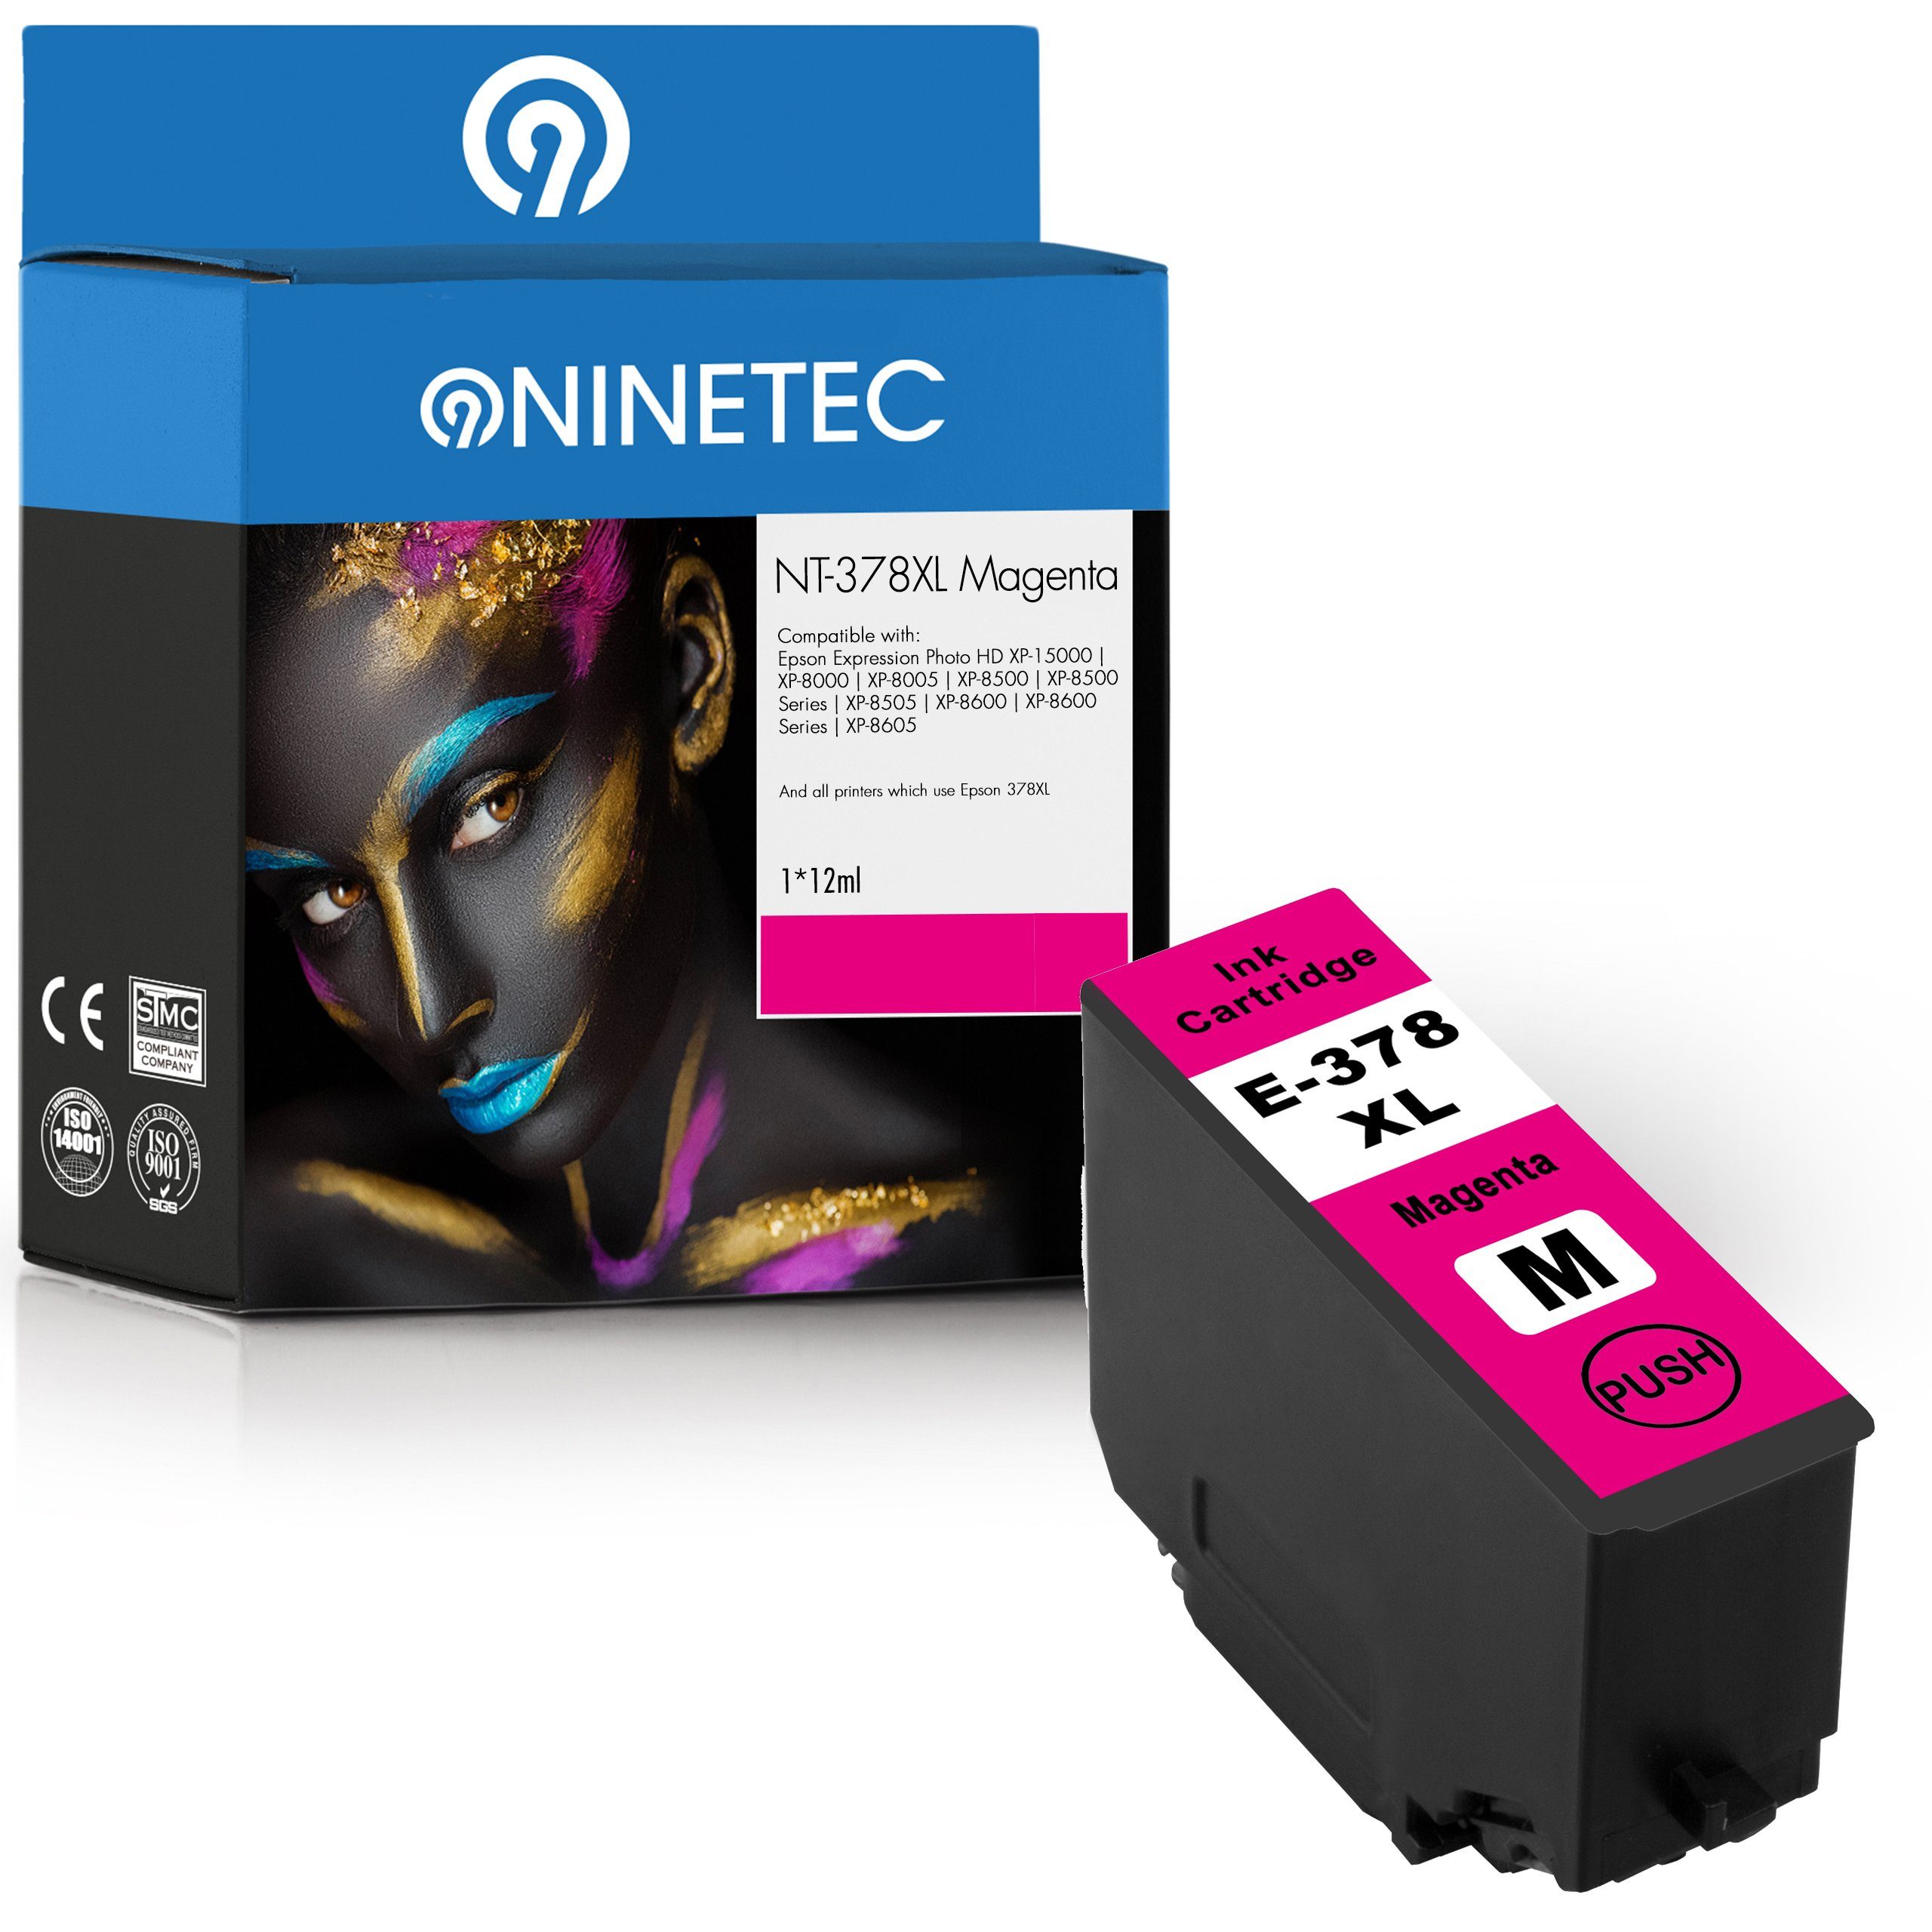 Epson Tintenpatrone ersetzt 378XL NINETEC Magenta T3793